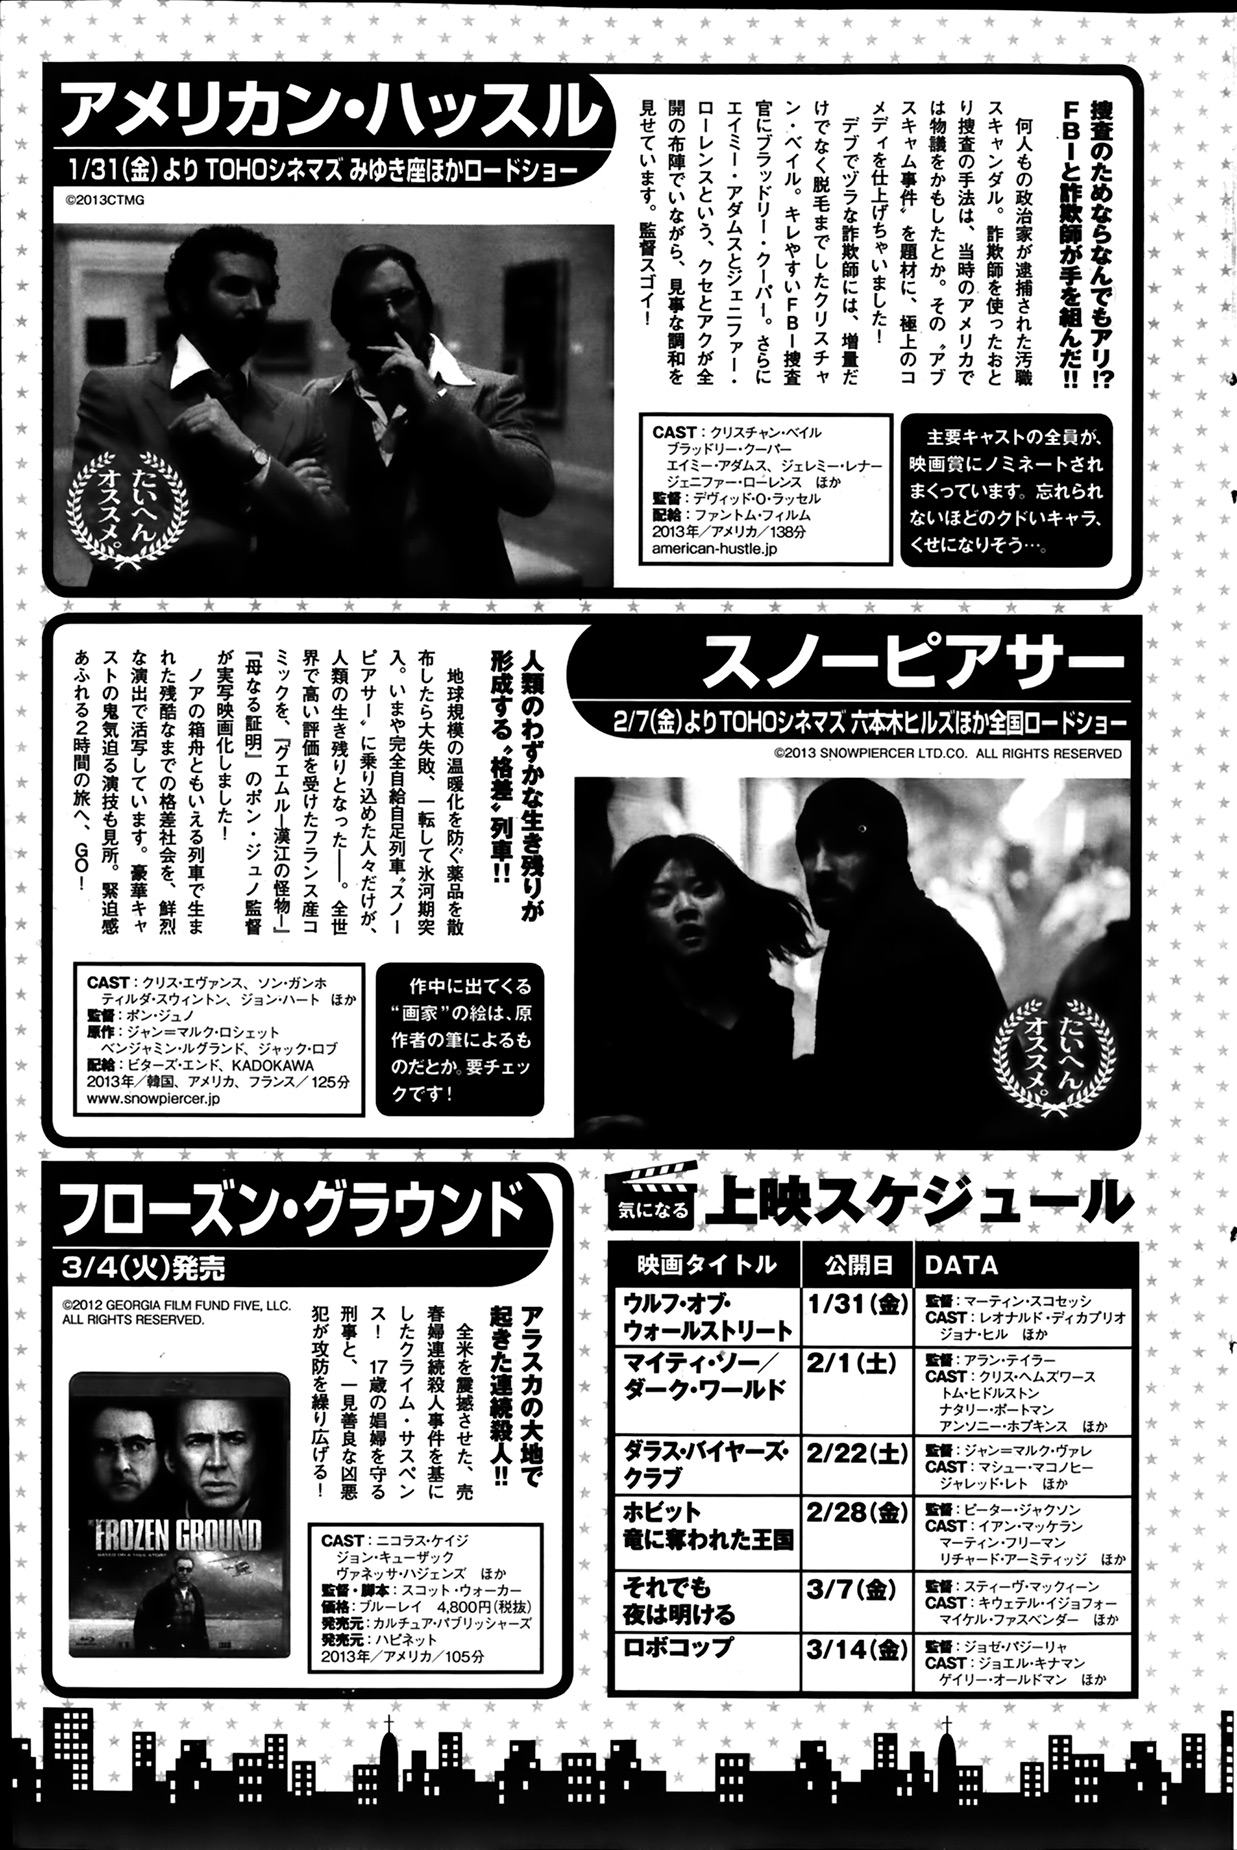 Monthly Vitaman 2014-03 月刊 ビタマン 2014年3月号